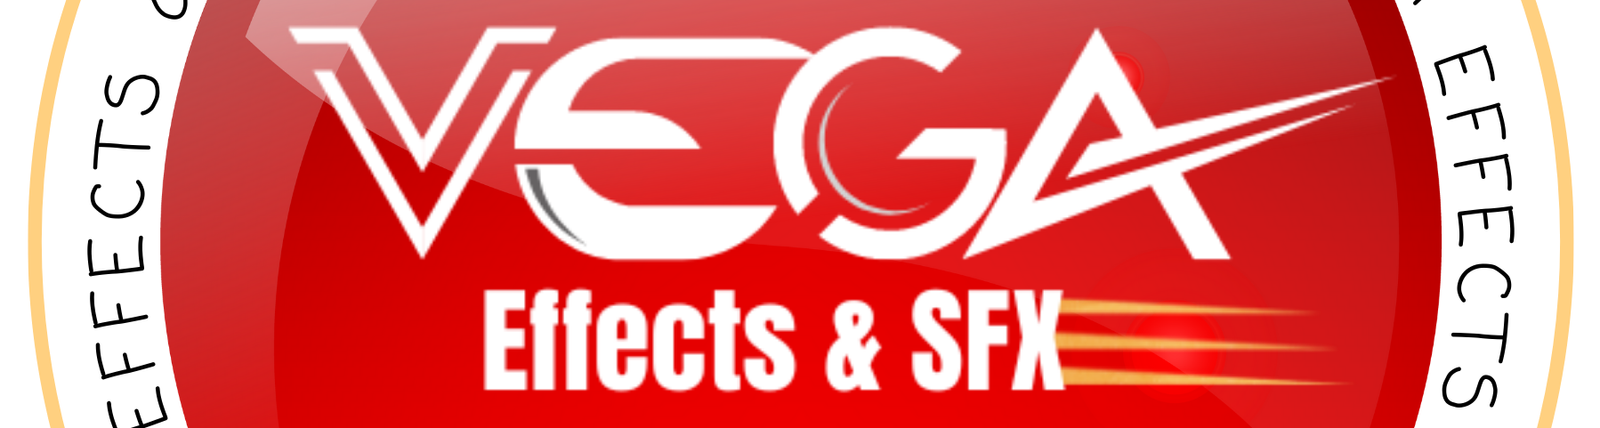 Vega effects sfx logo